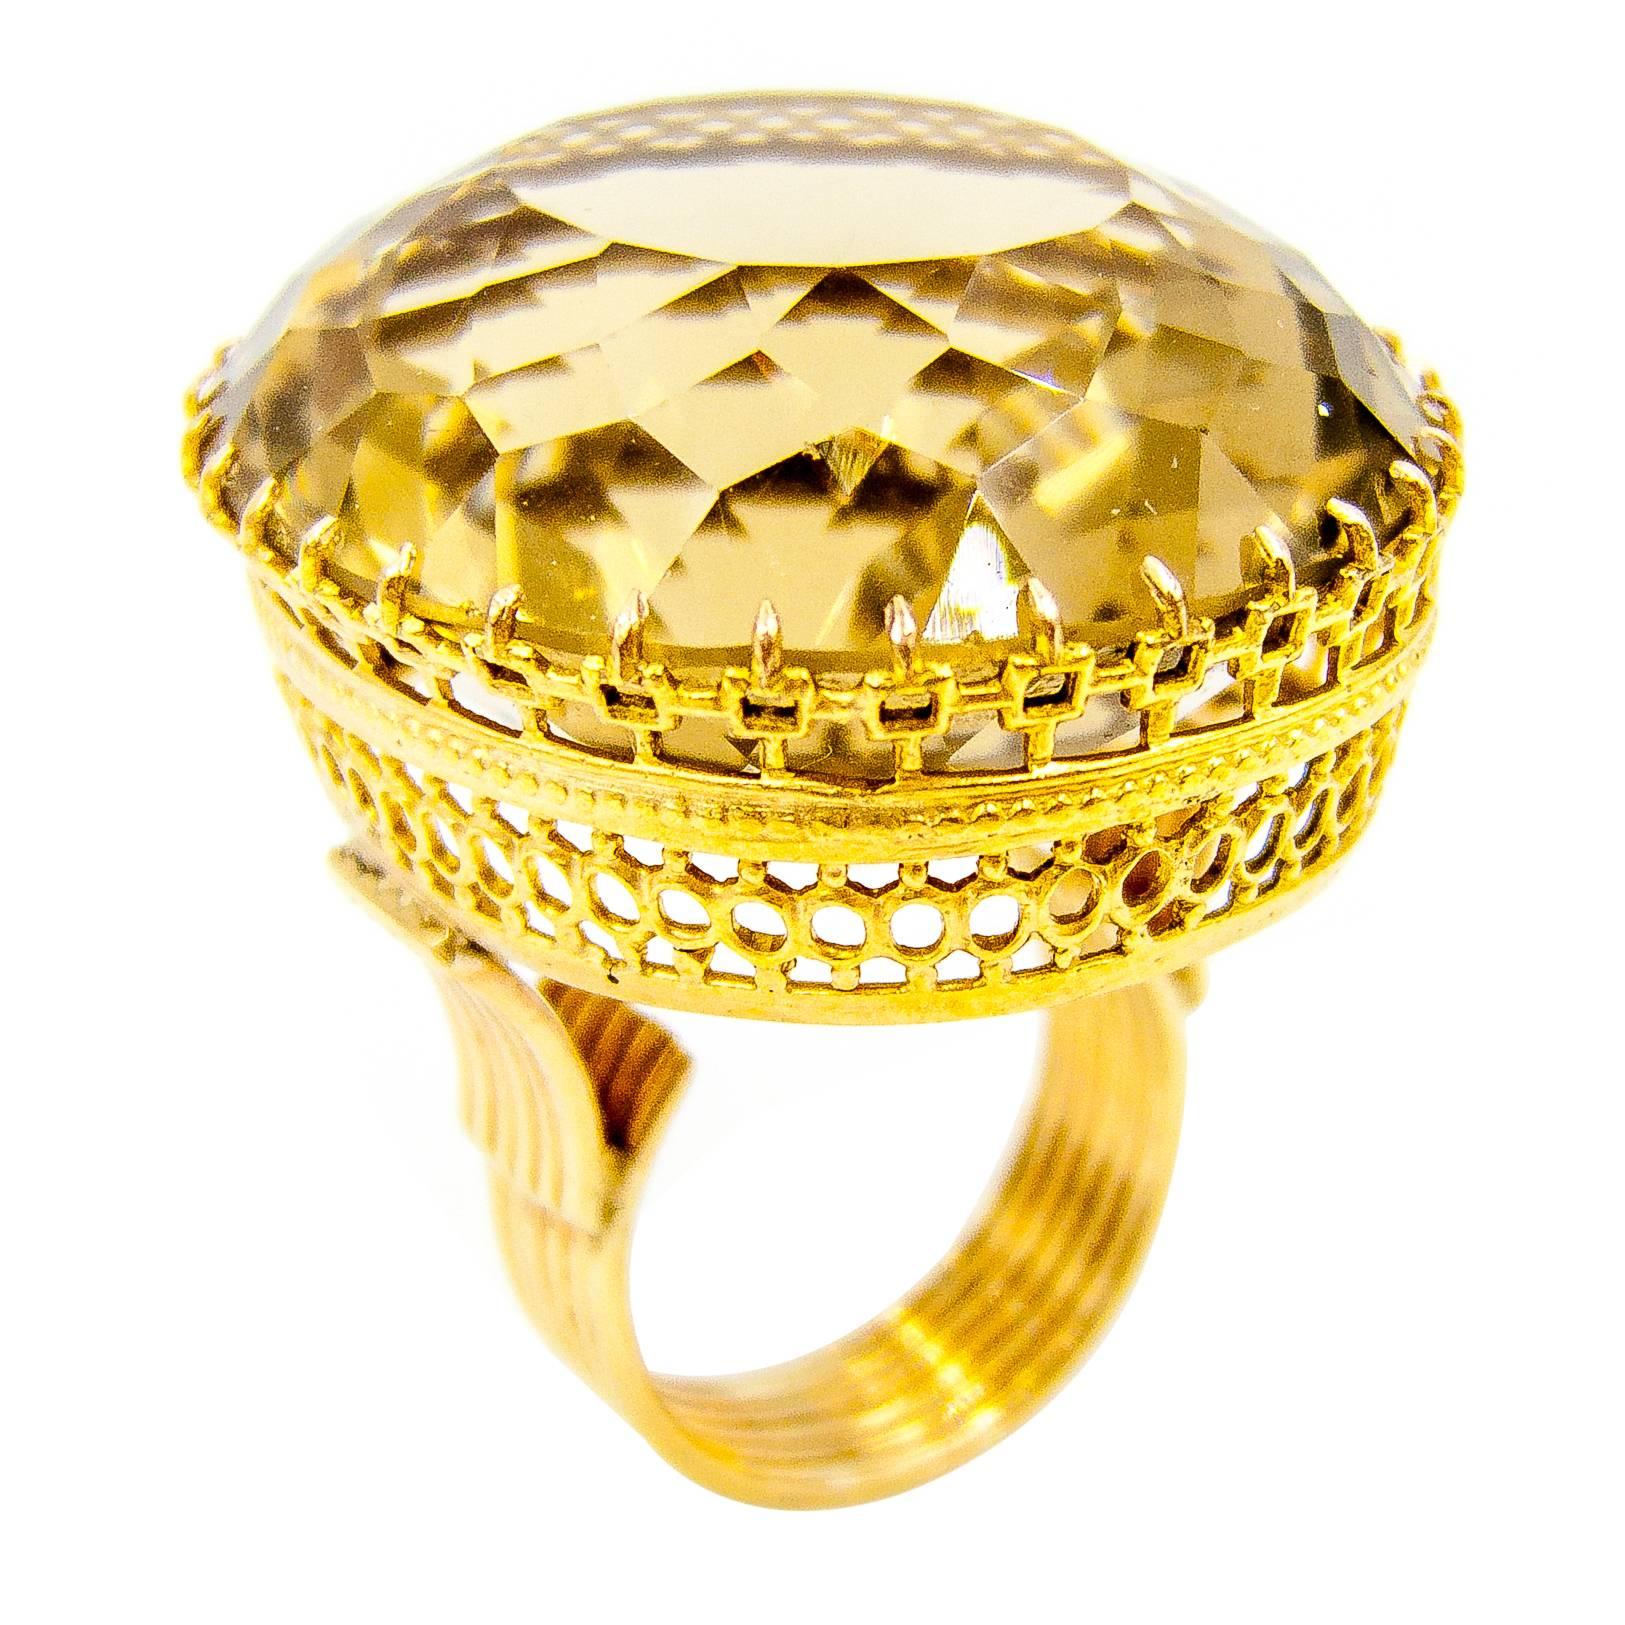 Regal Victorian Era Smoky Citrine Topaz Gold Cocktail Ring For Sale